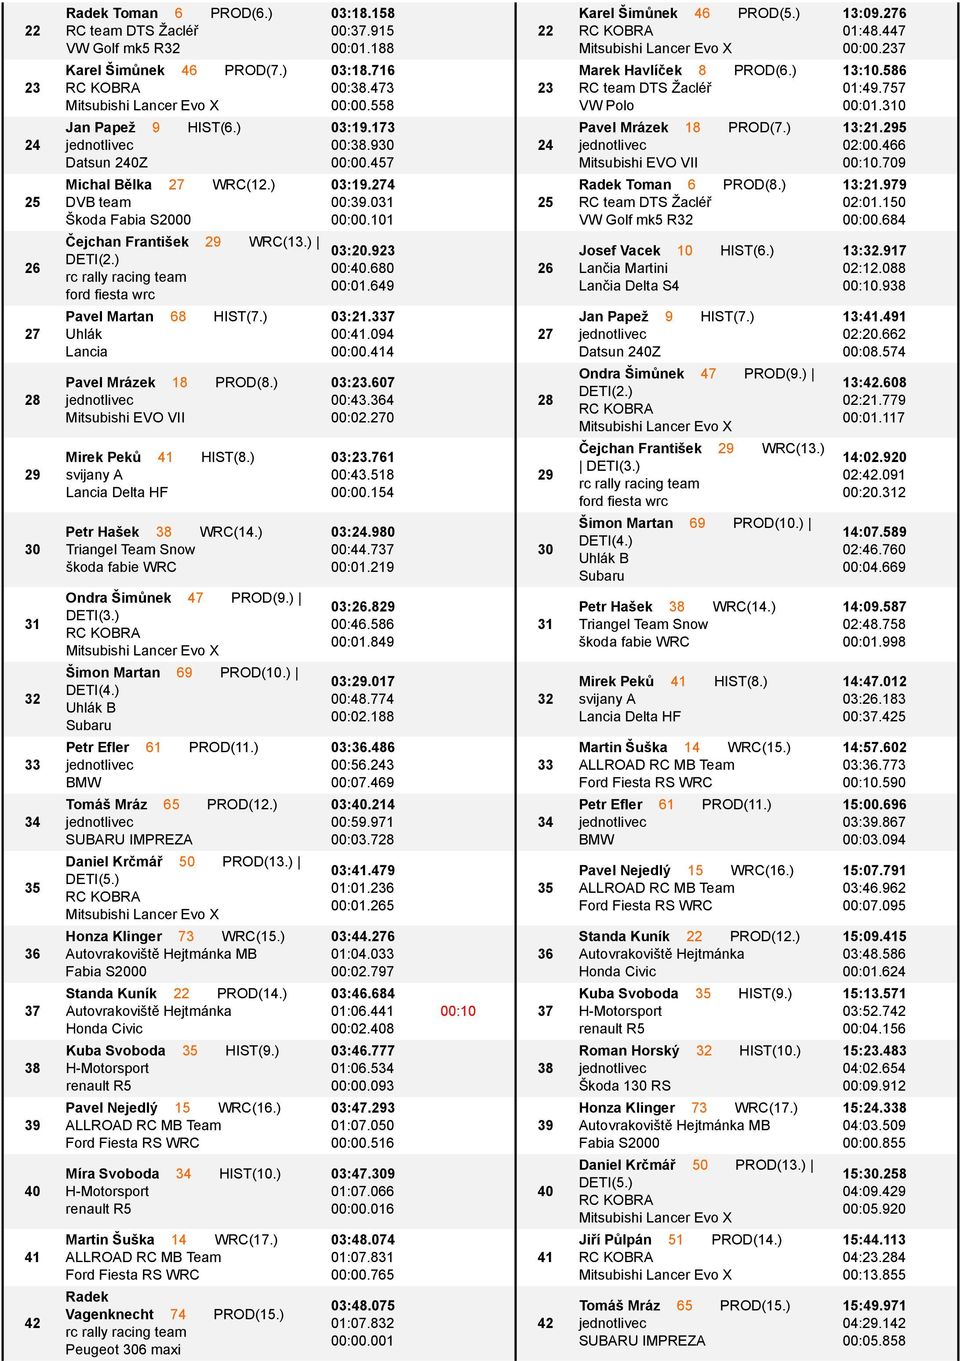 ) Йkoda fabie WRC Ondra Љimљnek 47 PROD(9.) DETI(3.) Љimon Martan 69 PROD(10.) DETI(4.) Uhlсk B Subaru Petr Efler 61 PROD(11.) BMW TomсЙ Mrсz 65 PROD(12.) SUBARU IMPREZA Daniel Krшmсј 50 PROD(13.